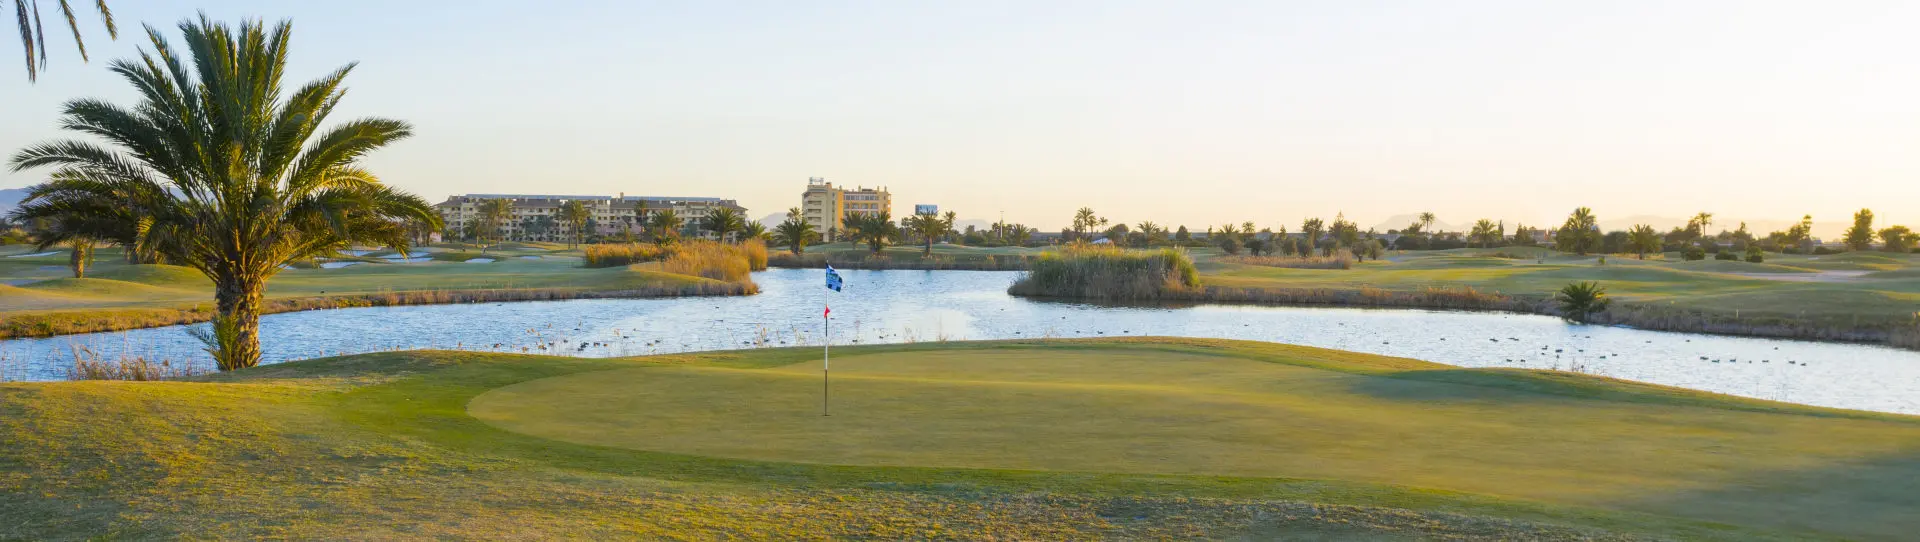 Spain golf courses - La Serena Golf Course - Photo 2